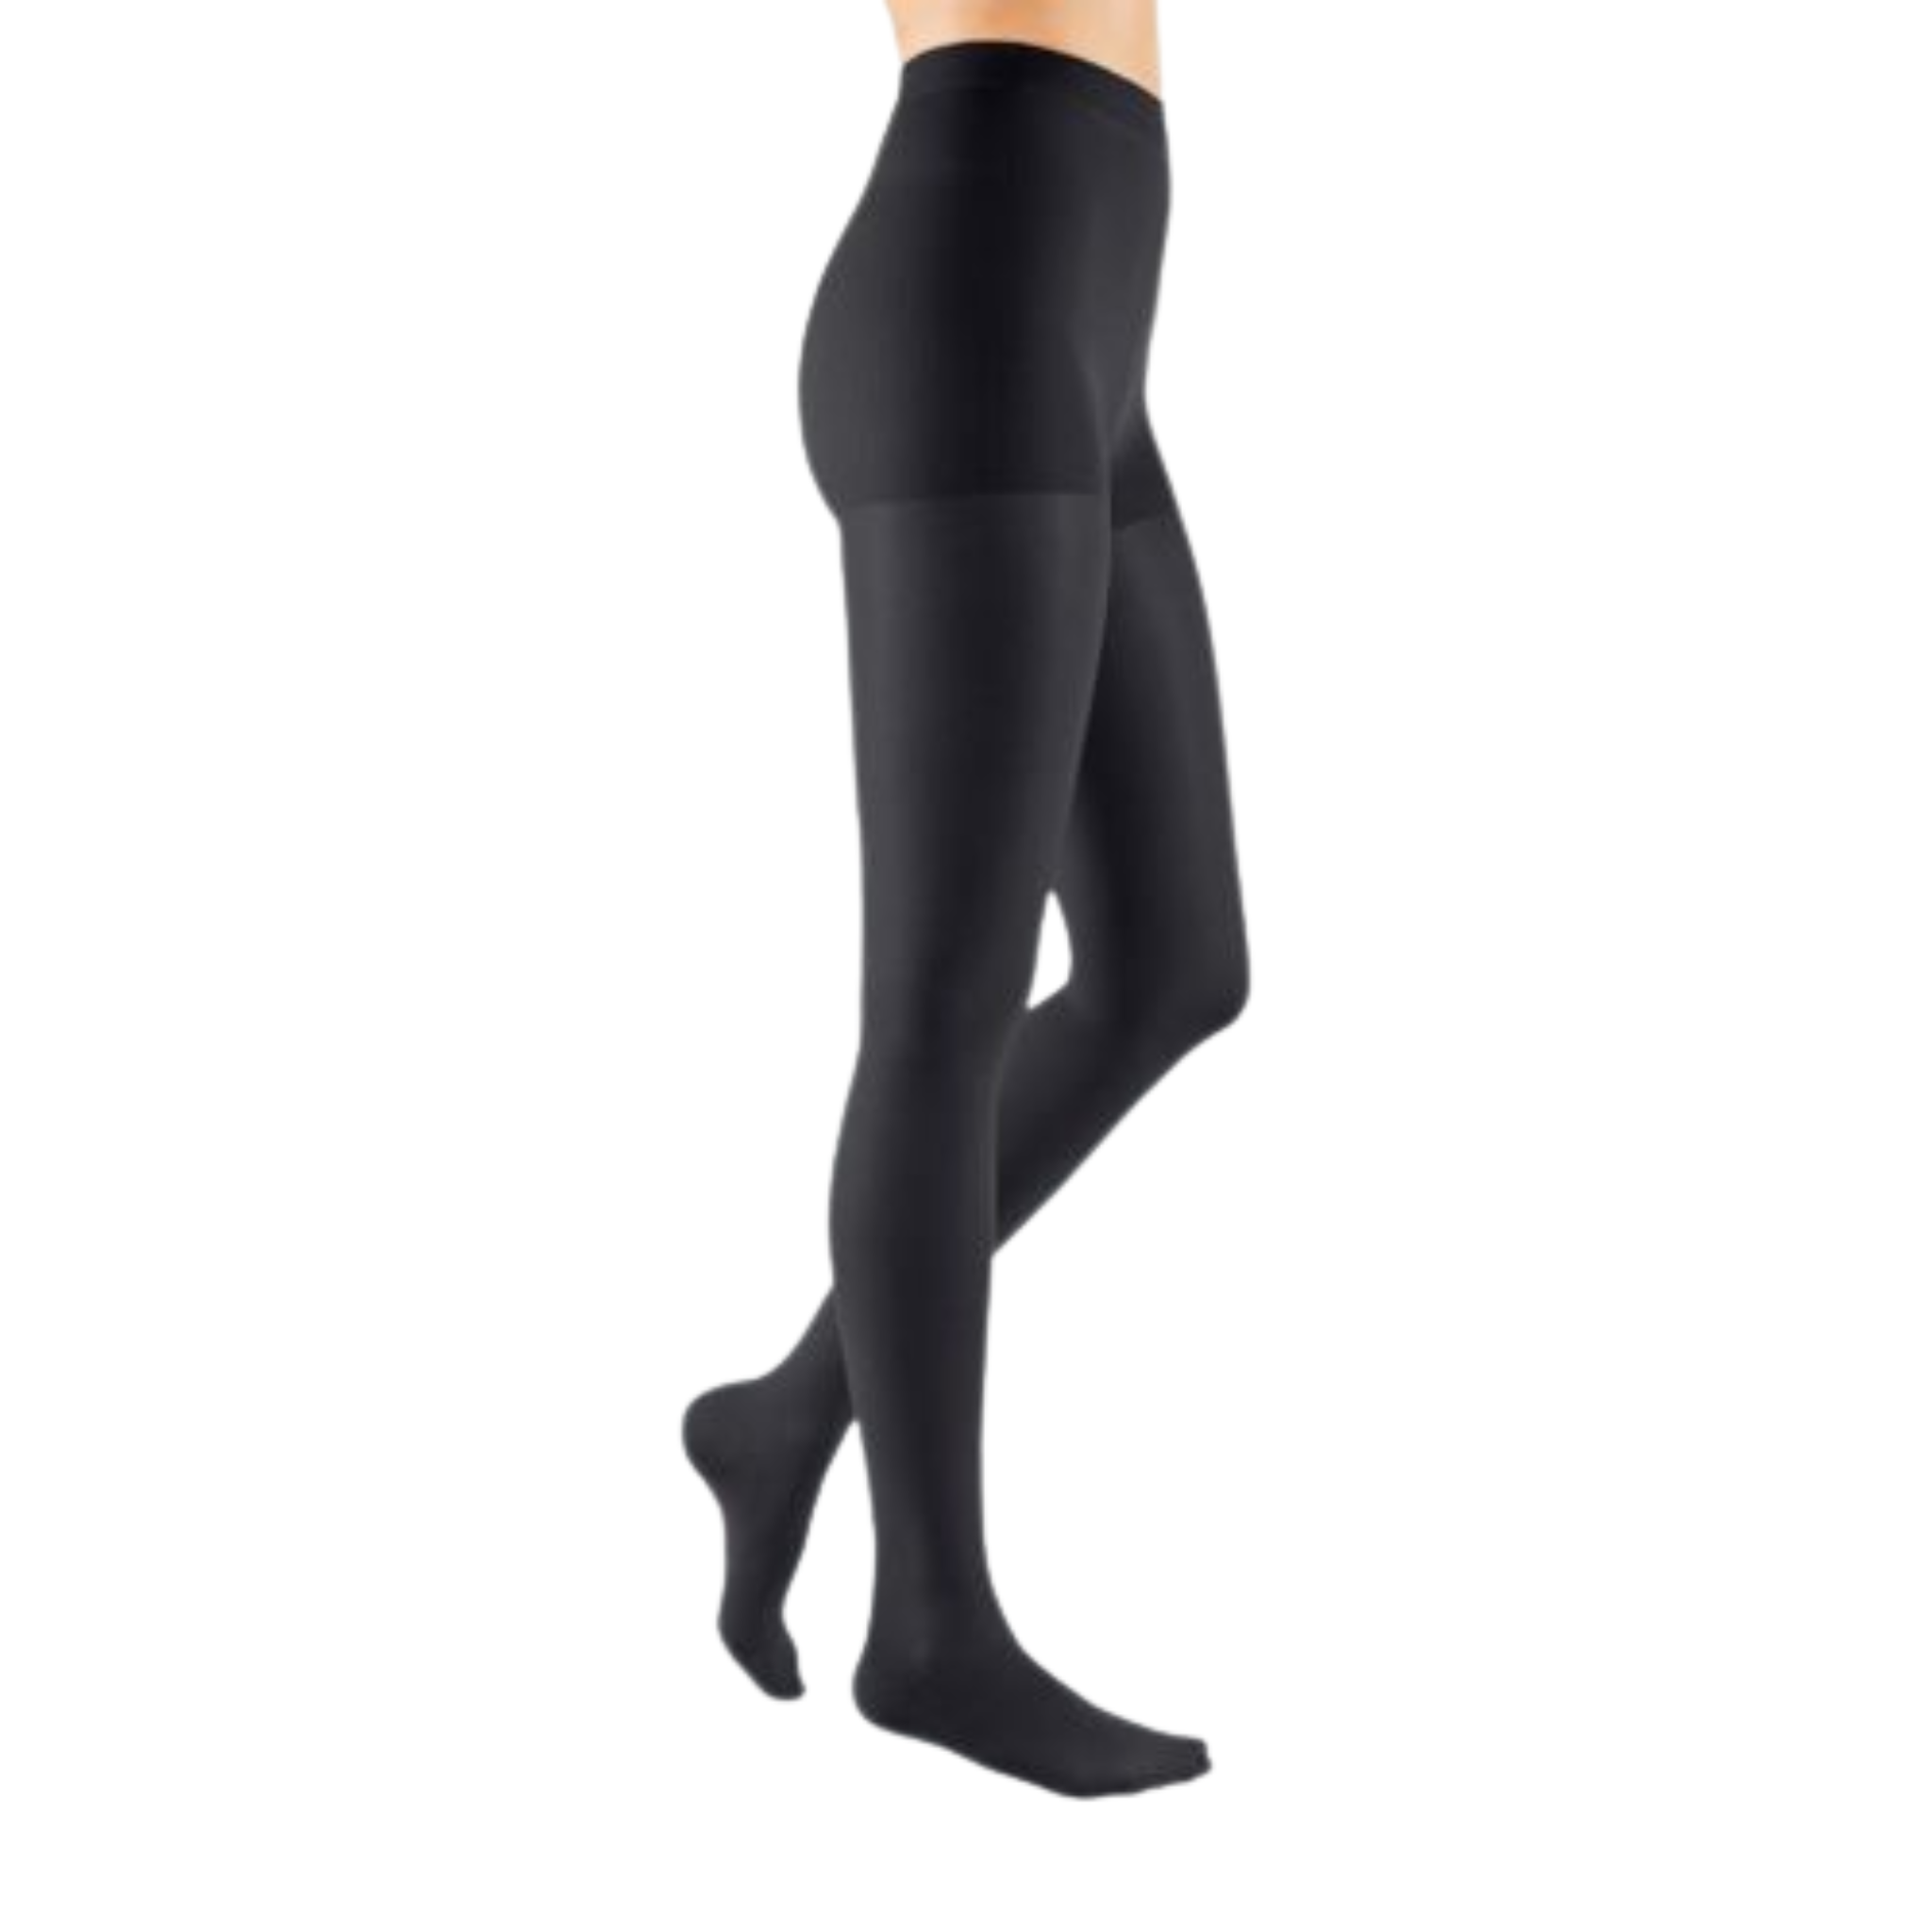 Compression Stockings  Pantyhose  Closed Toe  Black  mediven elegance®